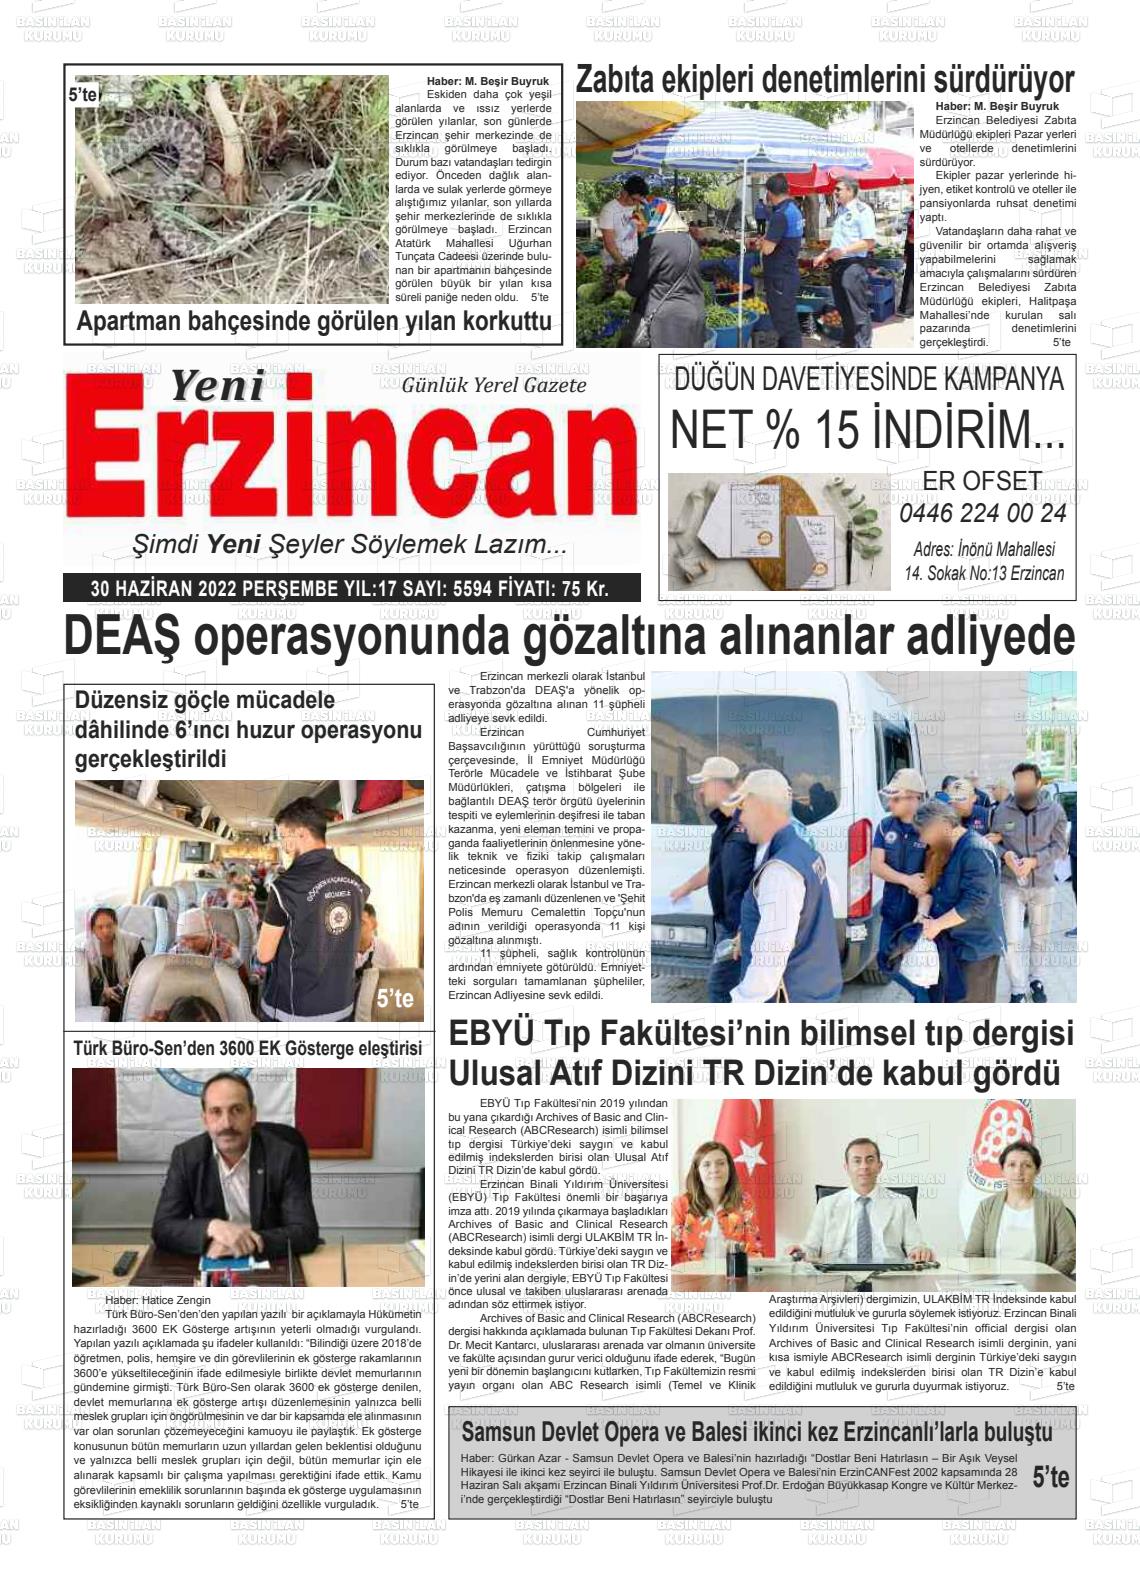 30 Haziran 2022 Yeni Erzincan Gazete Manşeti